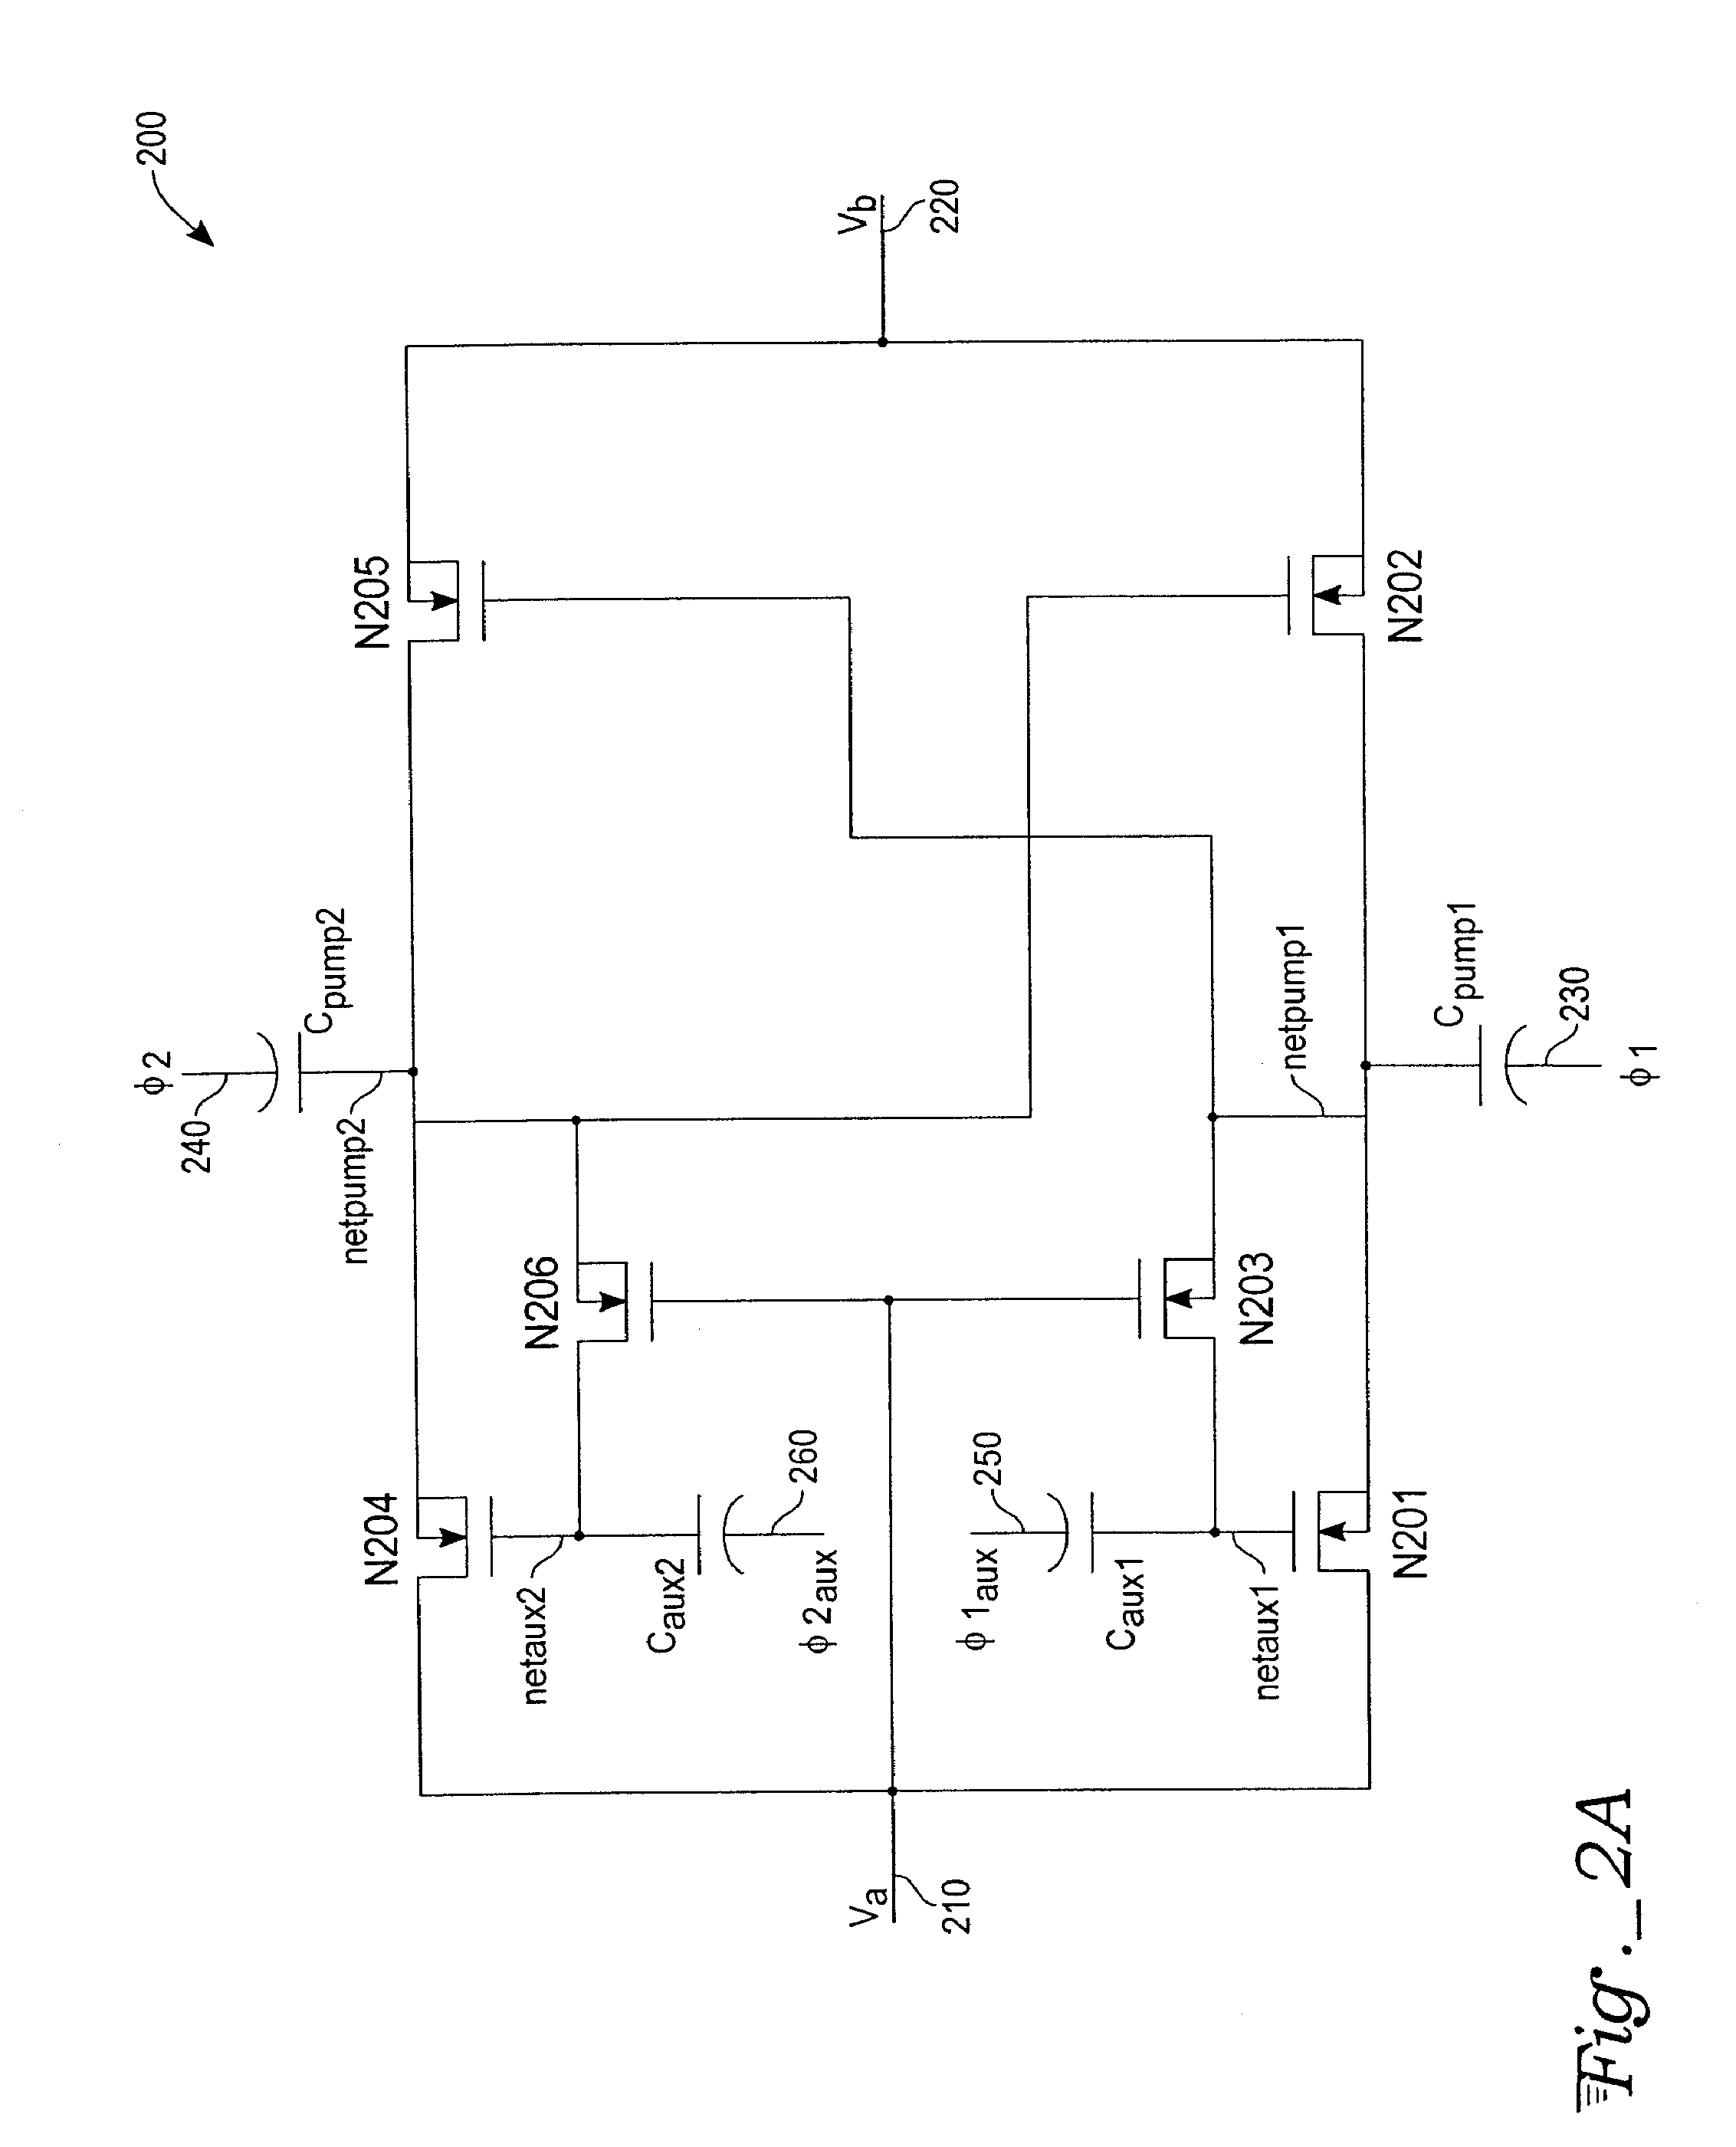 High efficiency bi-directional charge pump circuit